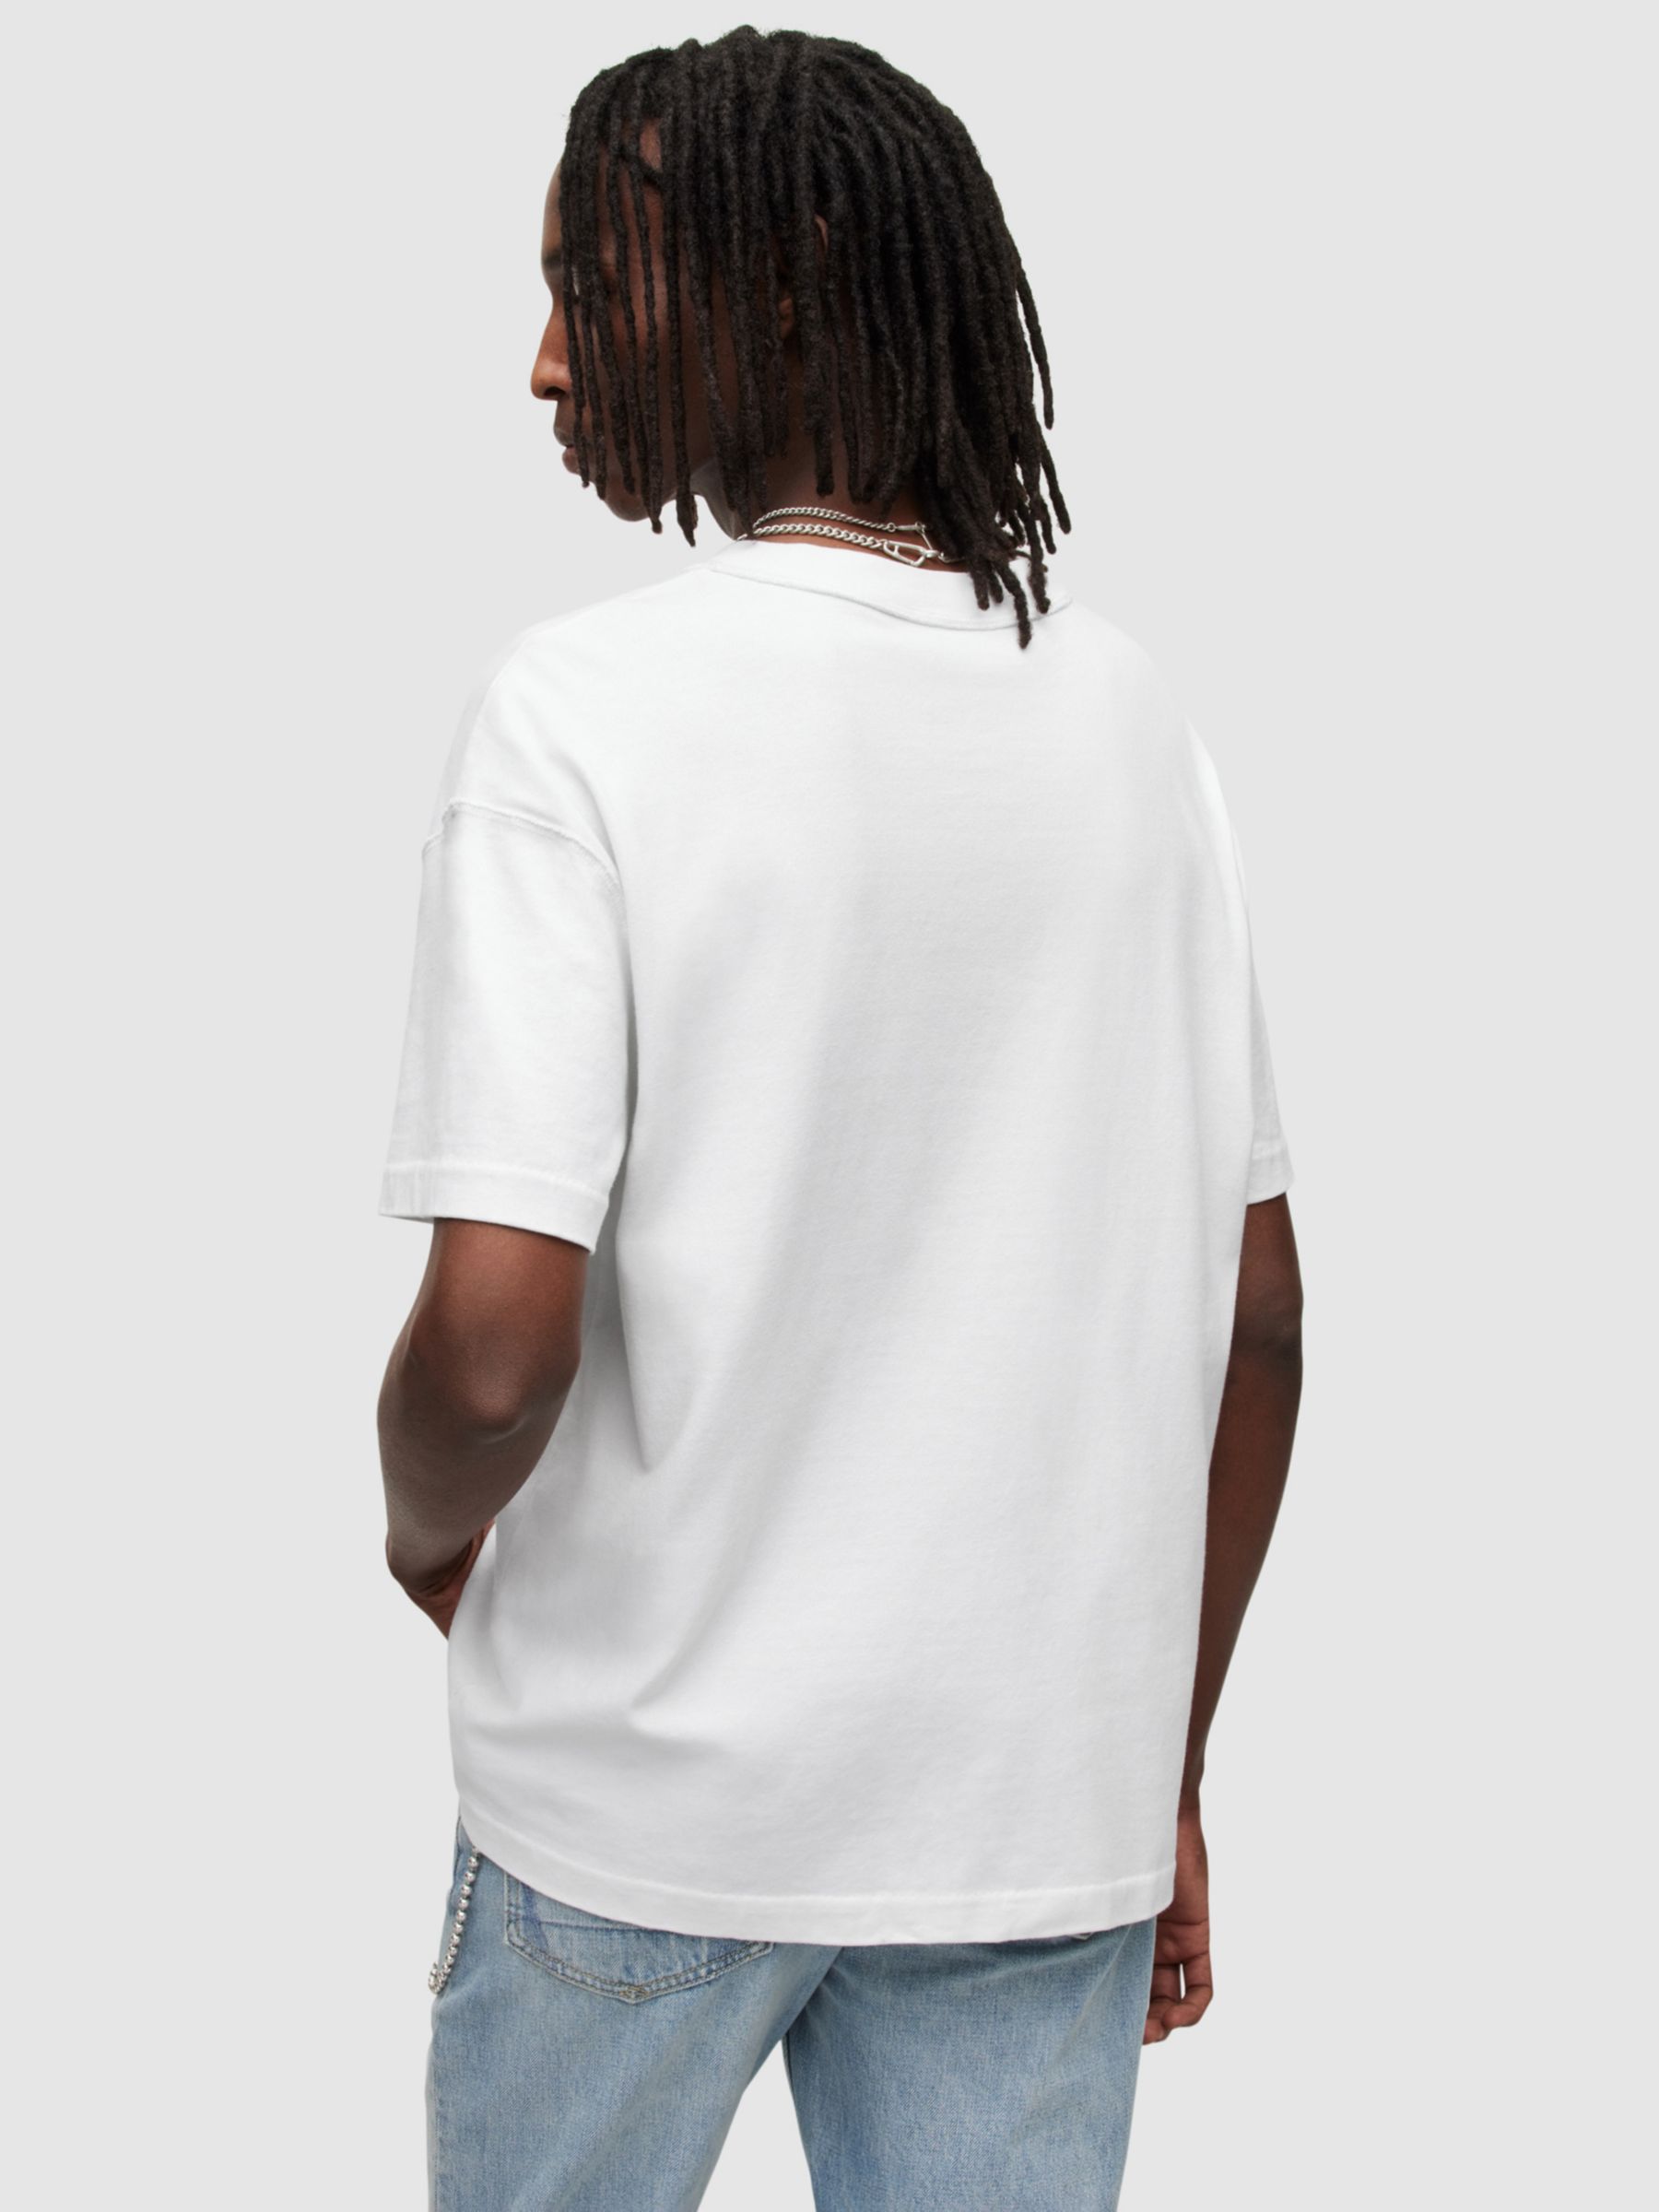 AllSaints Isac Short Sleeve T-Shirt, Optic White at John Lewis & Partners